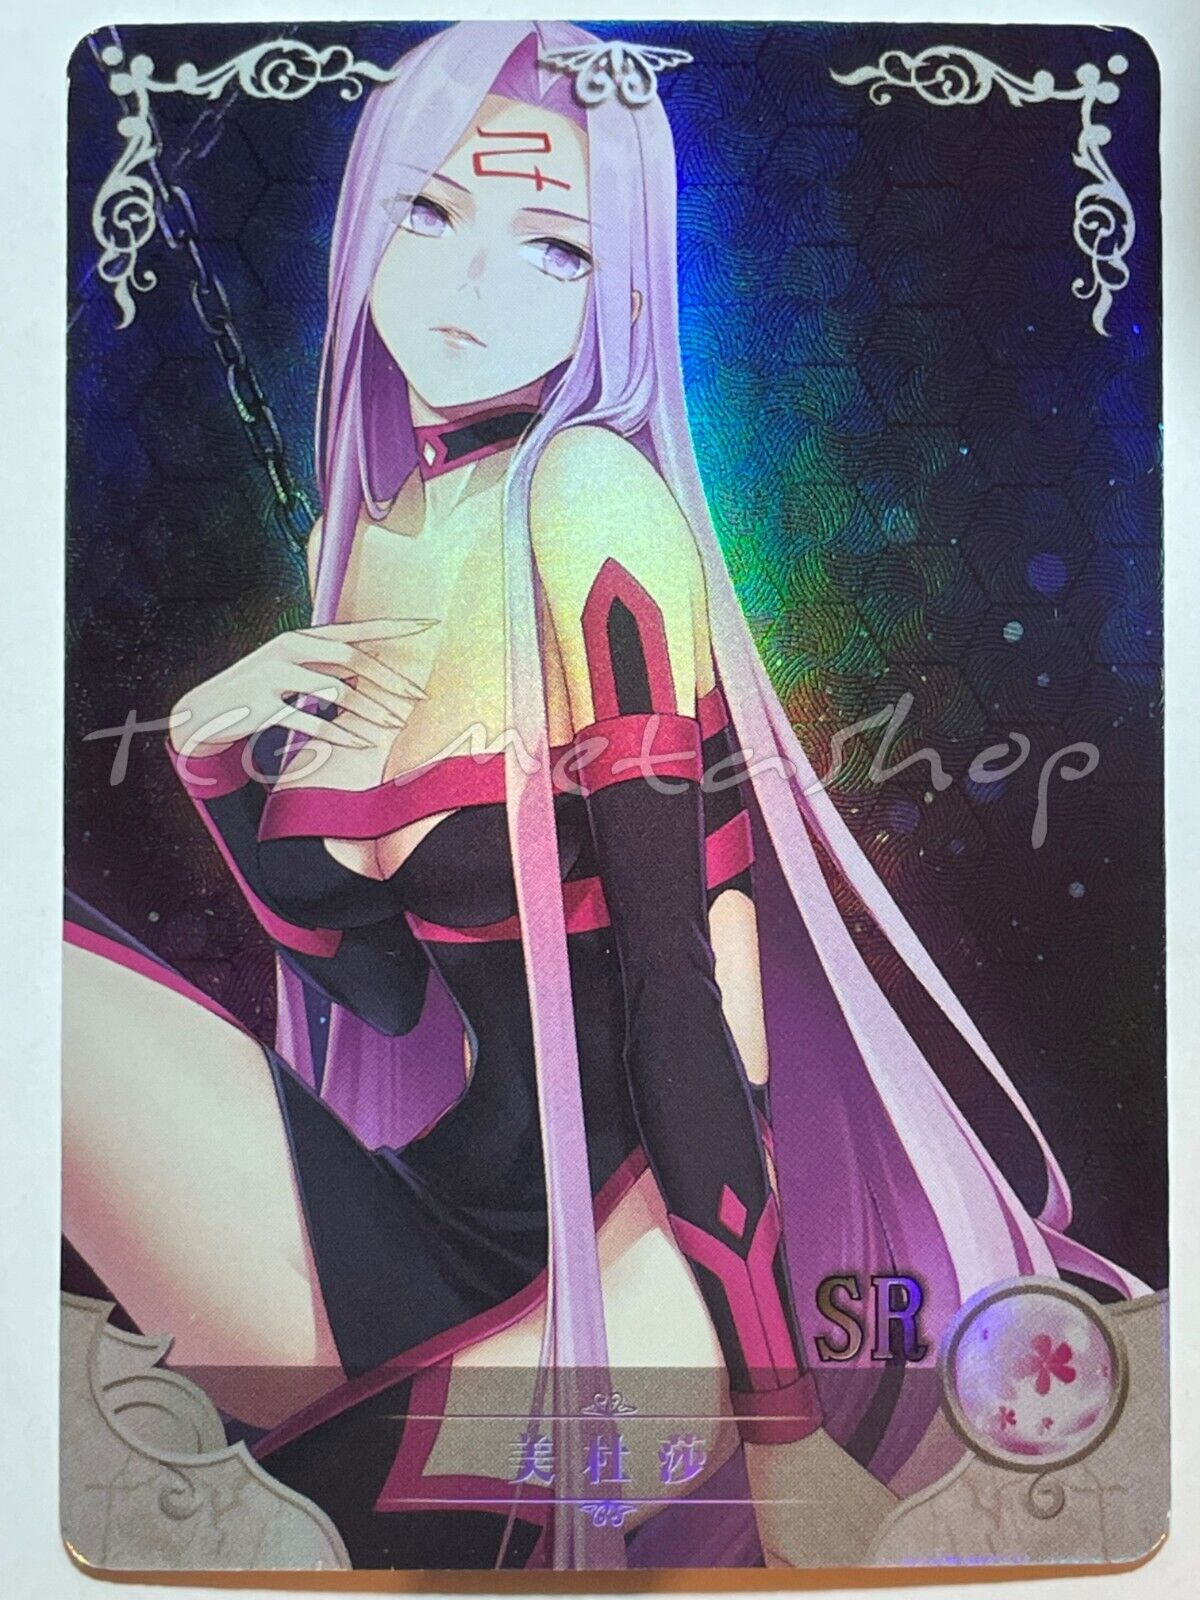 🔥 5m01 [Pick Your Singles ZR MR PTR SSR SR] Goddess Story Waifu Anime Cards 🔥